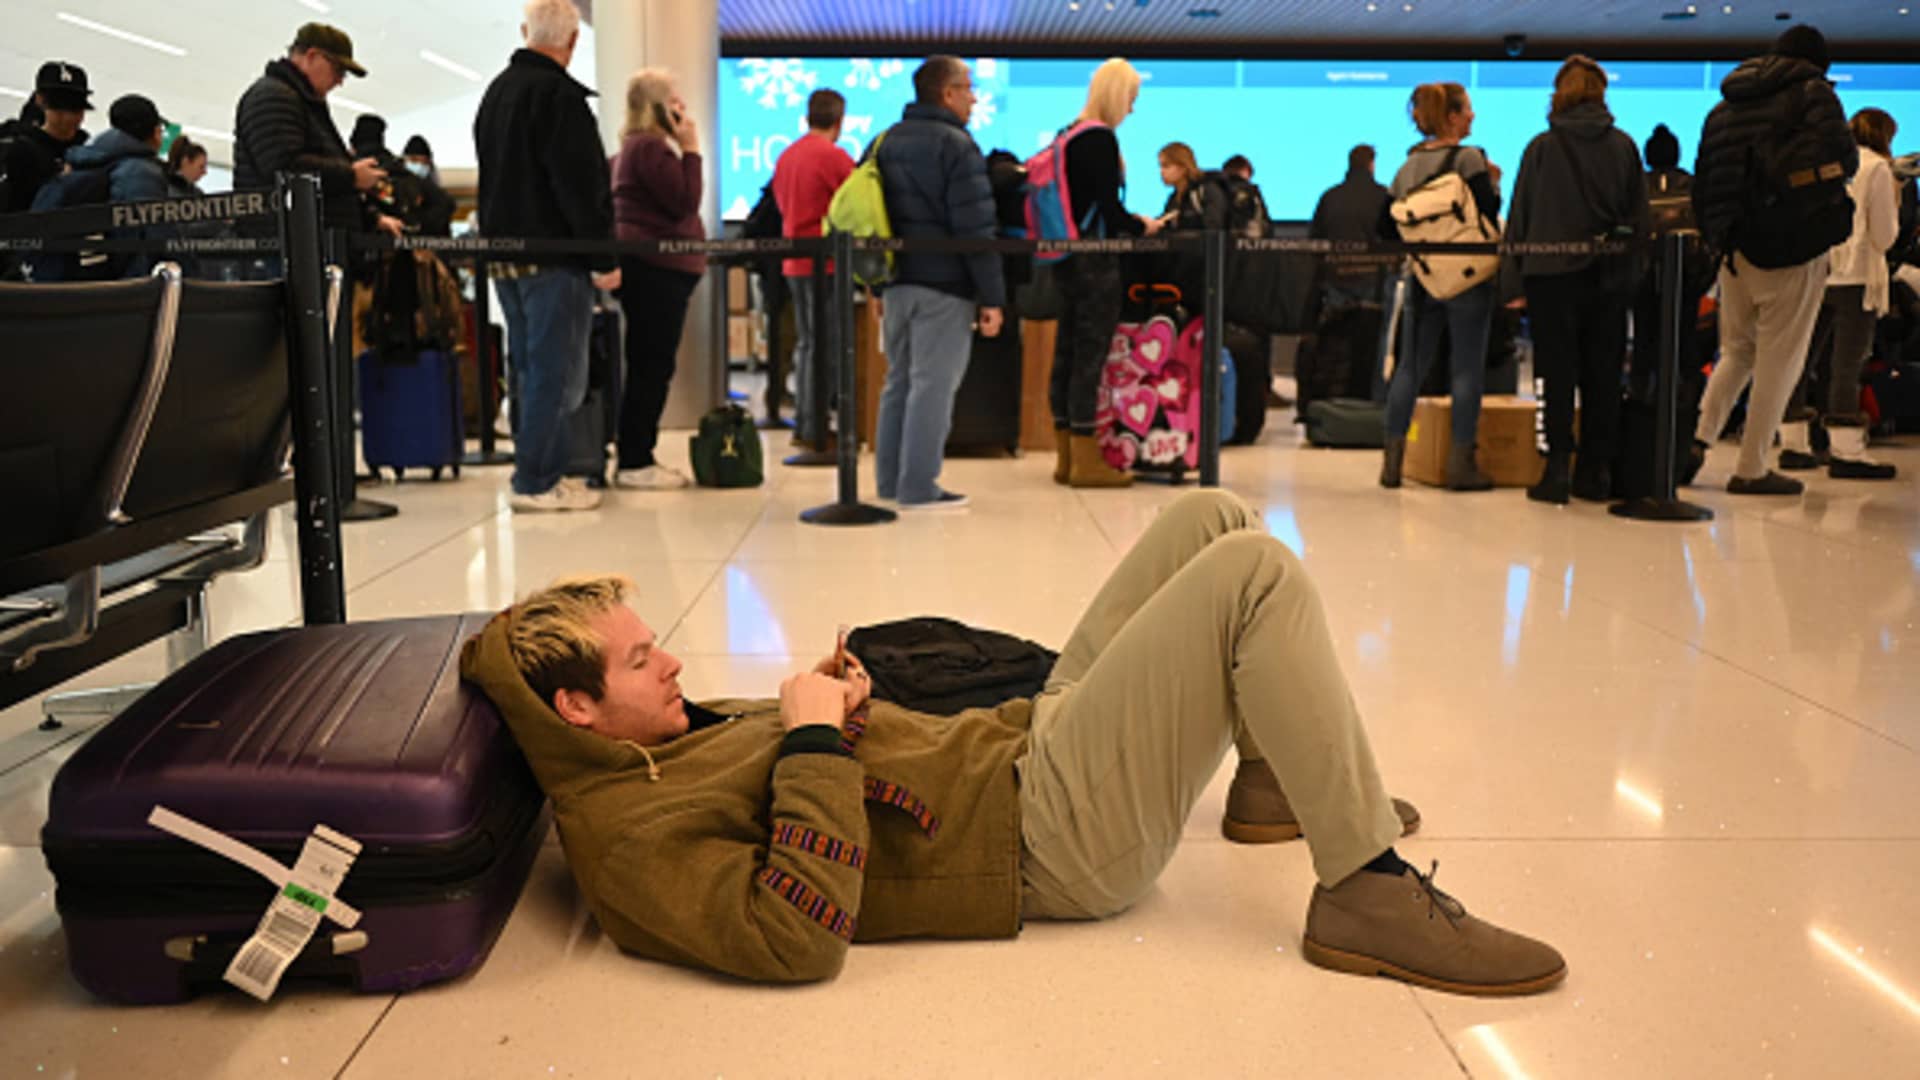 James Garofalo of Colorado Springs is checking cellphone after his flight cancelation at Denver International Airport in Denver, Colorado on Thursday, December 22, 2022.